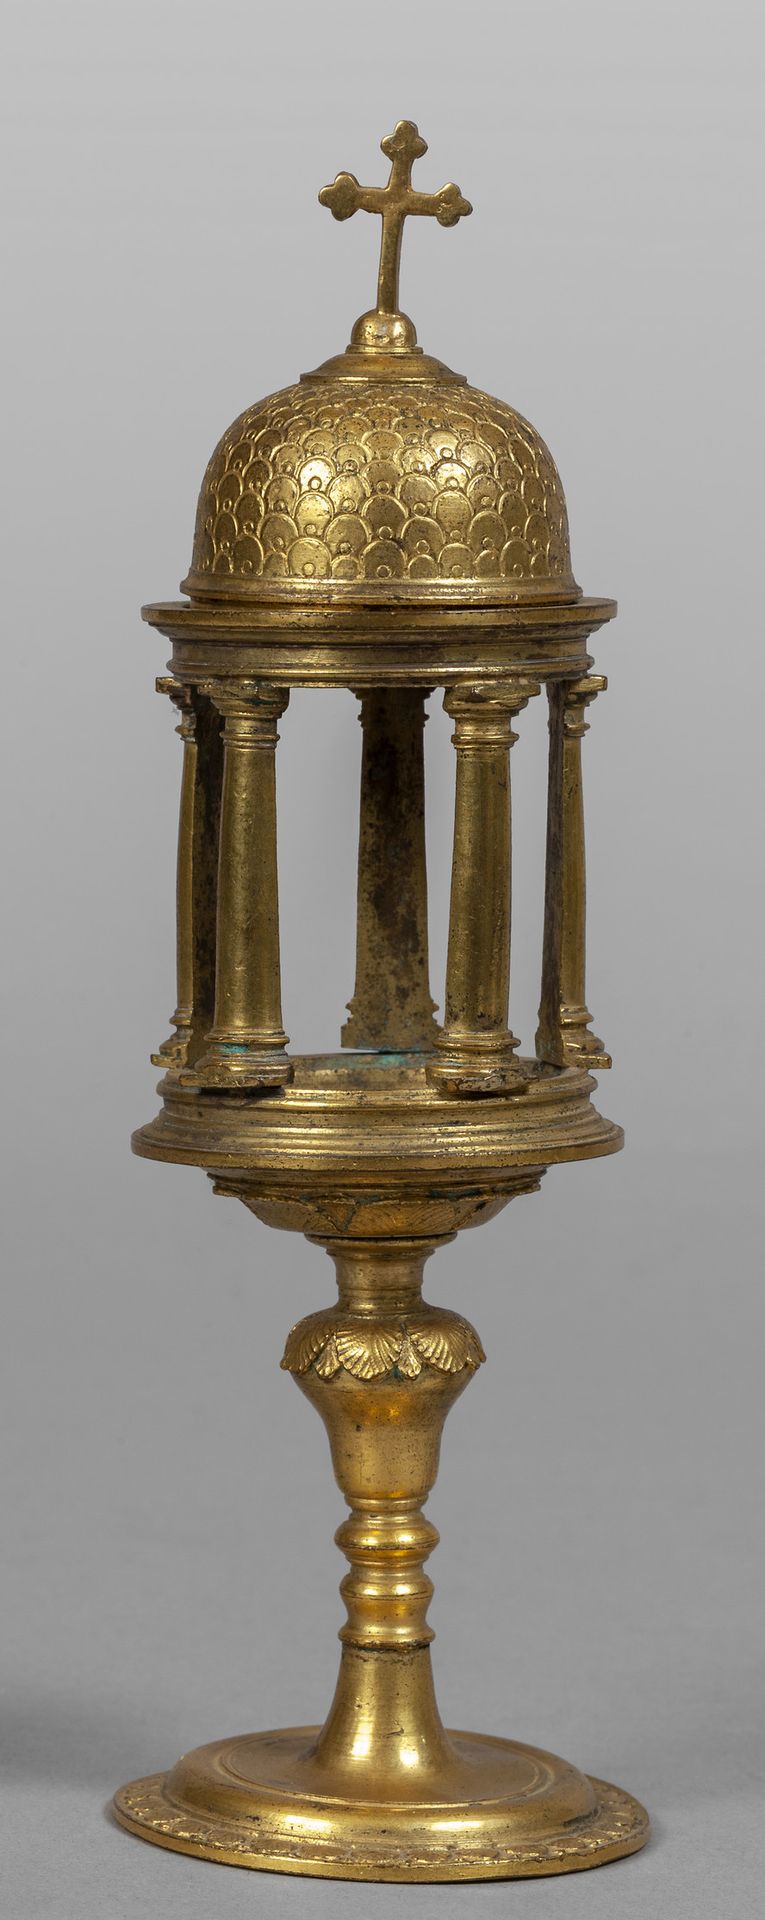 Ostensorio in bronzo dorato, sec. XVII Gilded bronze monstrance, 17th century
h.&hellip;